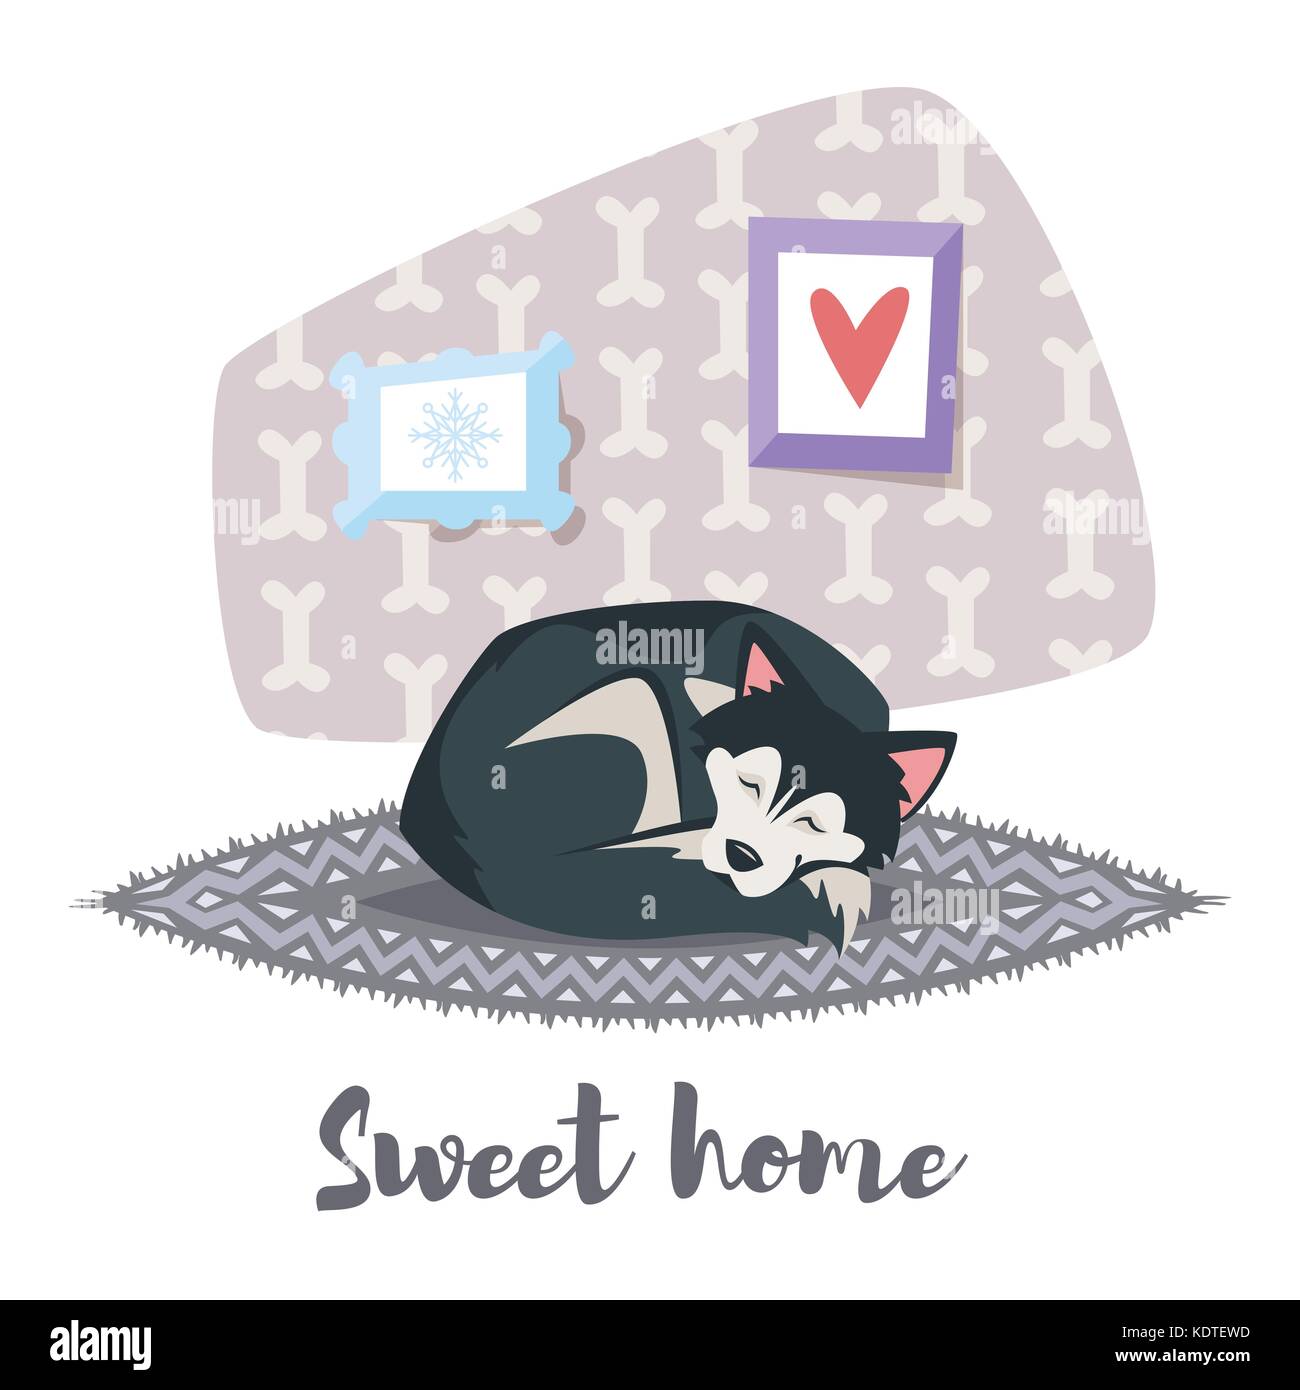 Vector cartoon style illustration of cute husky dog sleeping on the carpet. 'Sweet home' title. Stock Vector